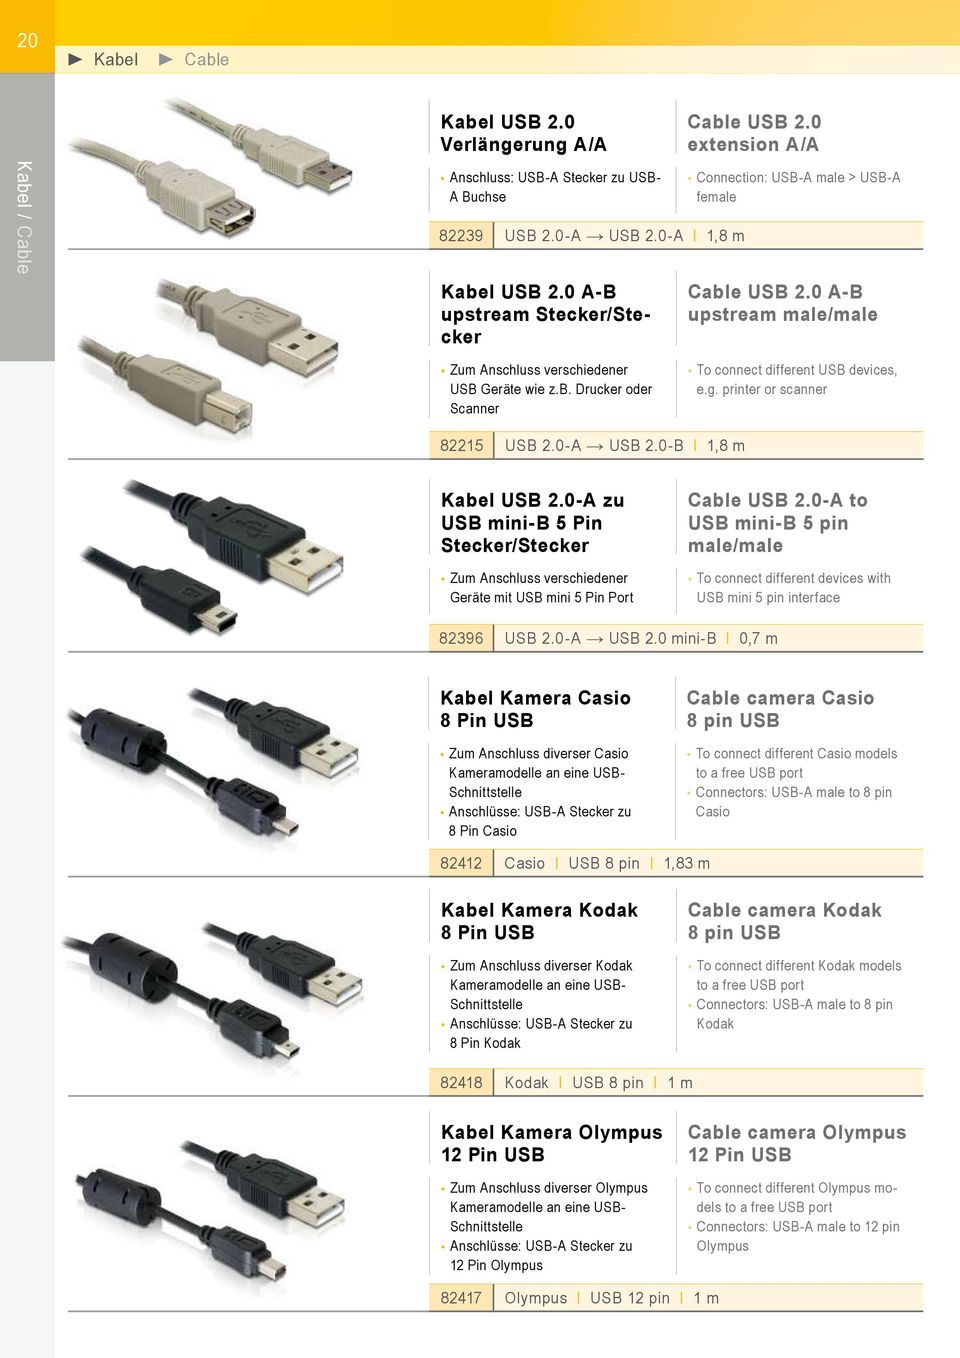 printer or scanner Scanner 82215 USB 2.0-A USB 2.0-B I 1,8 m Kabel USB 2.0-A zu USB mini-b 5 Pin Stecker/Stecker Cable USB 2.